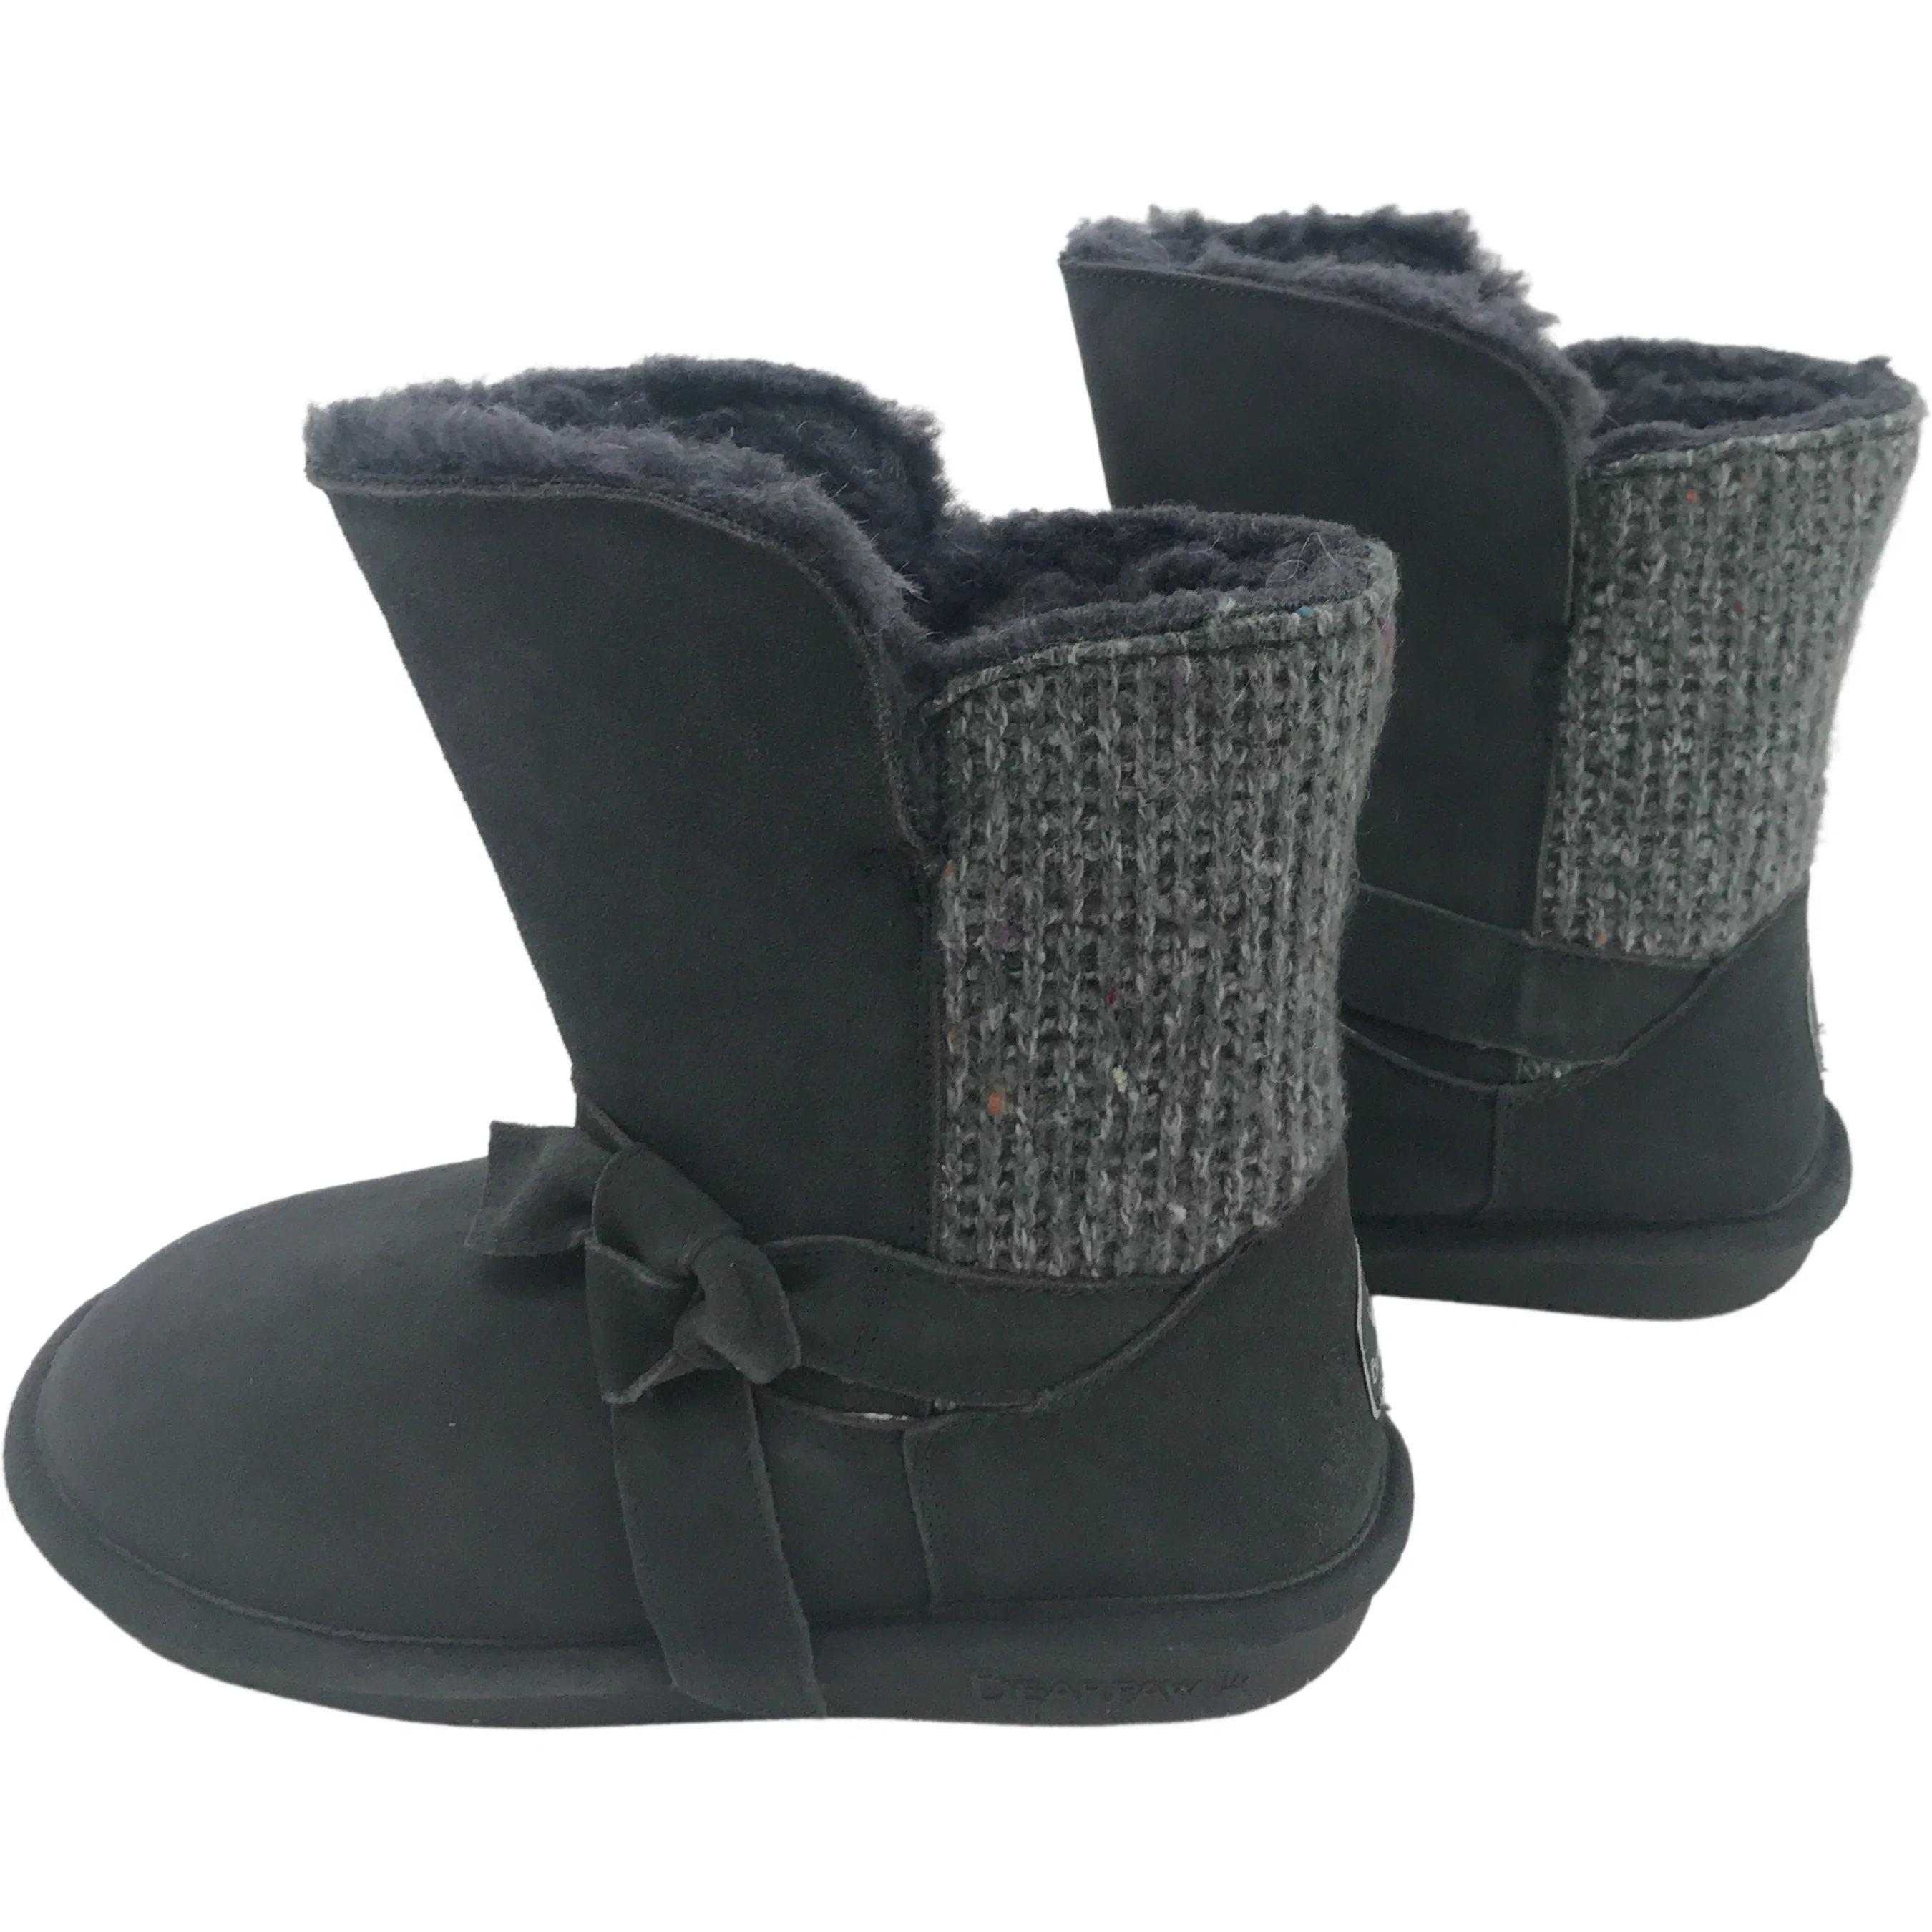 BearPaw Women's Winter Boots / Short Winter Boots / Geneva Knitted Boots / Grey / Size 5 **WORN**